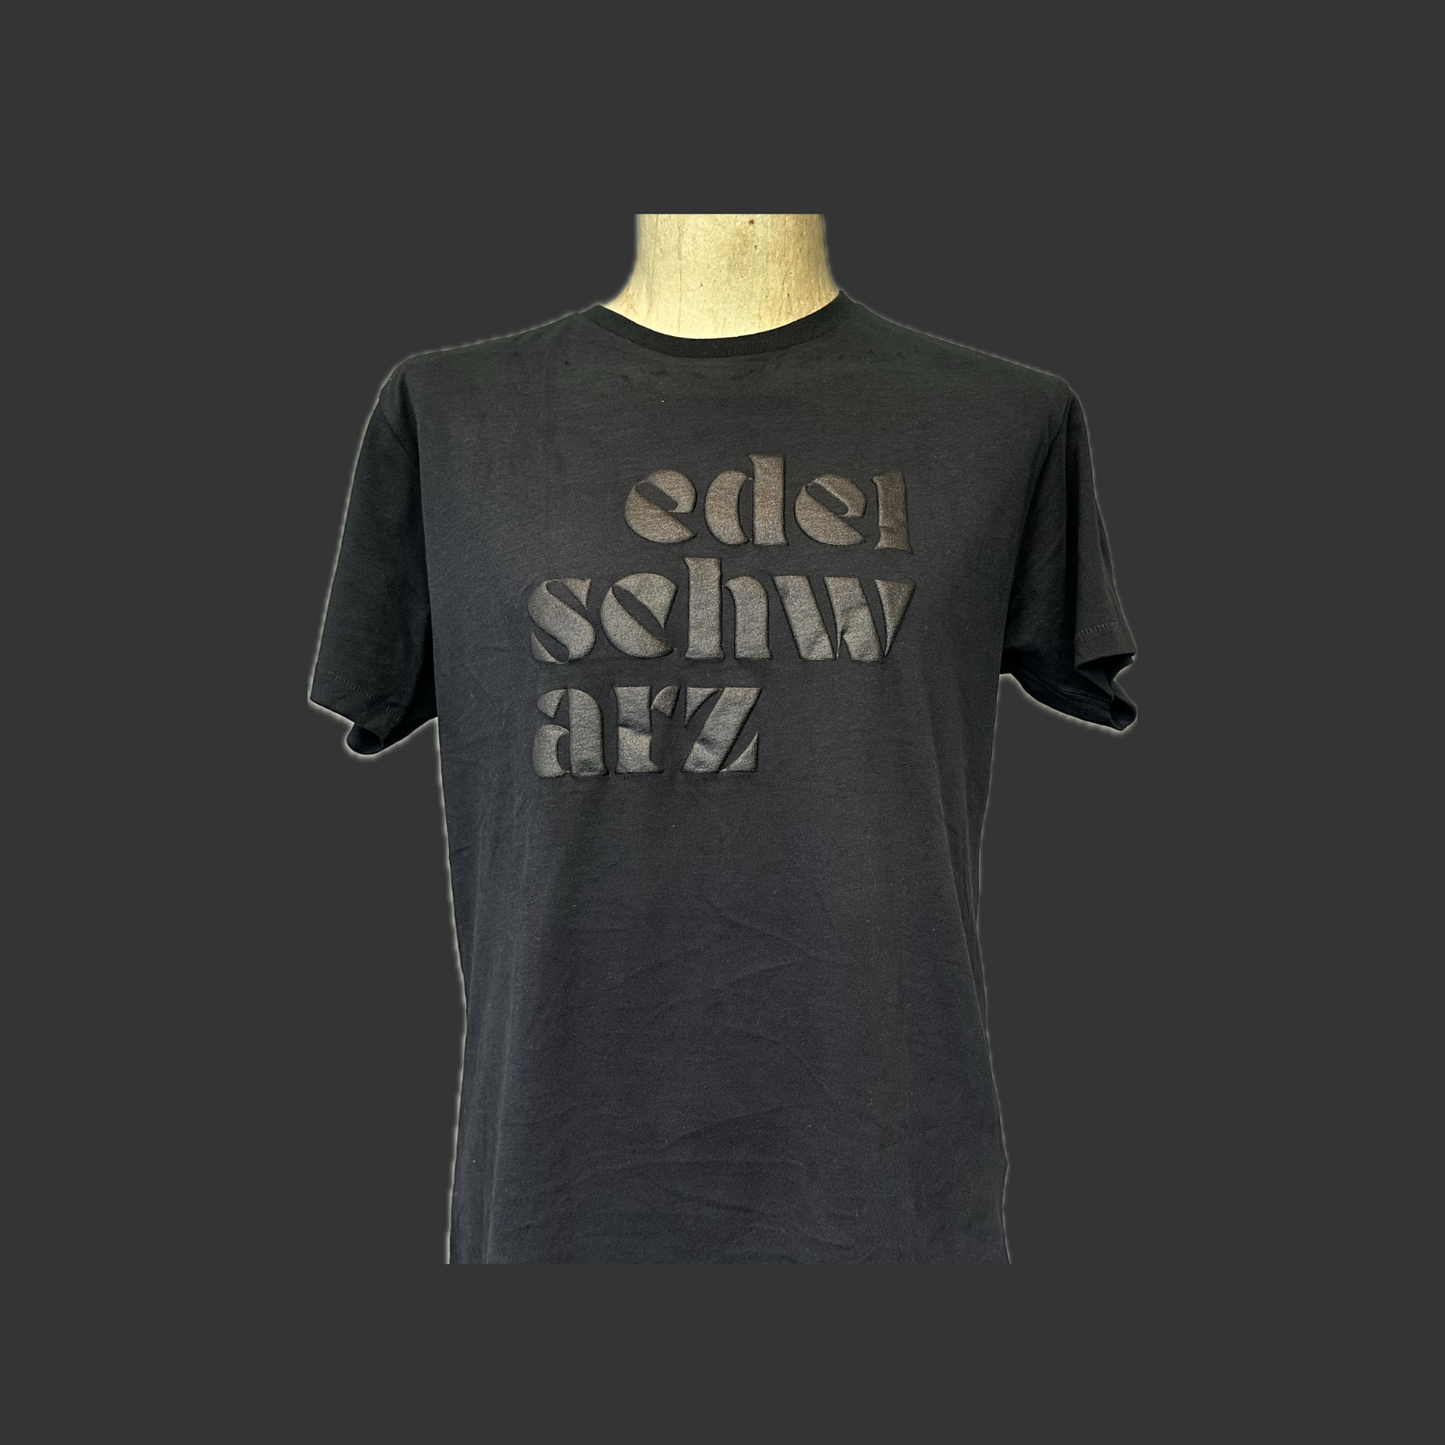 Edelschwarz T-Shirt Short Sleeve Men